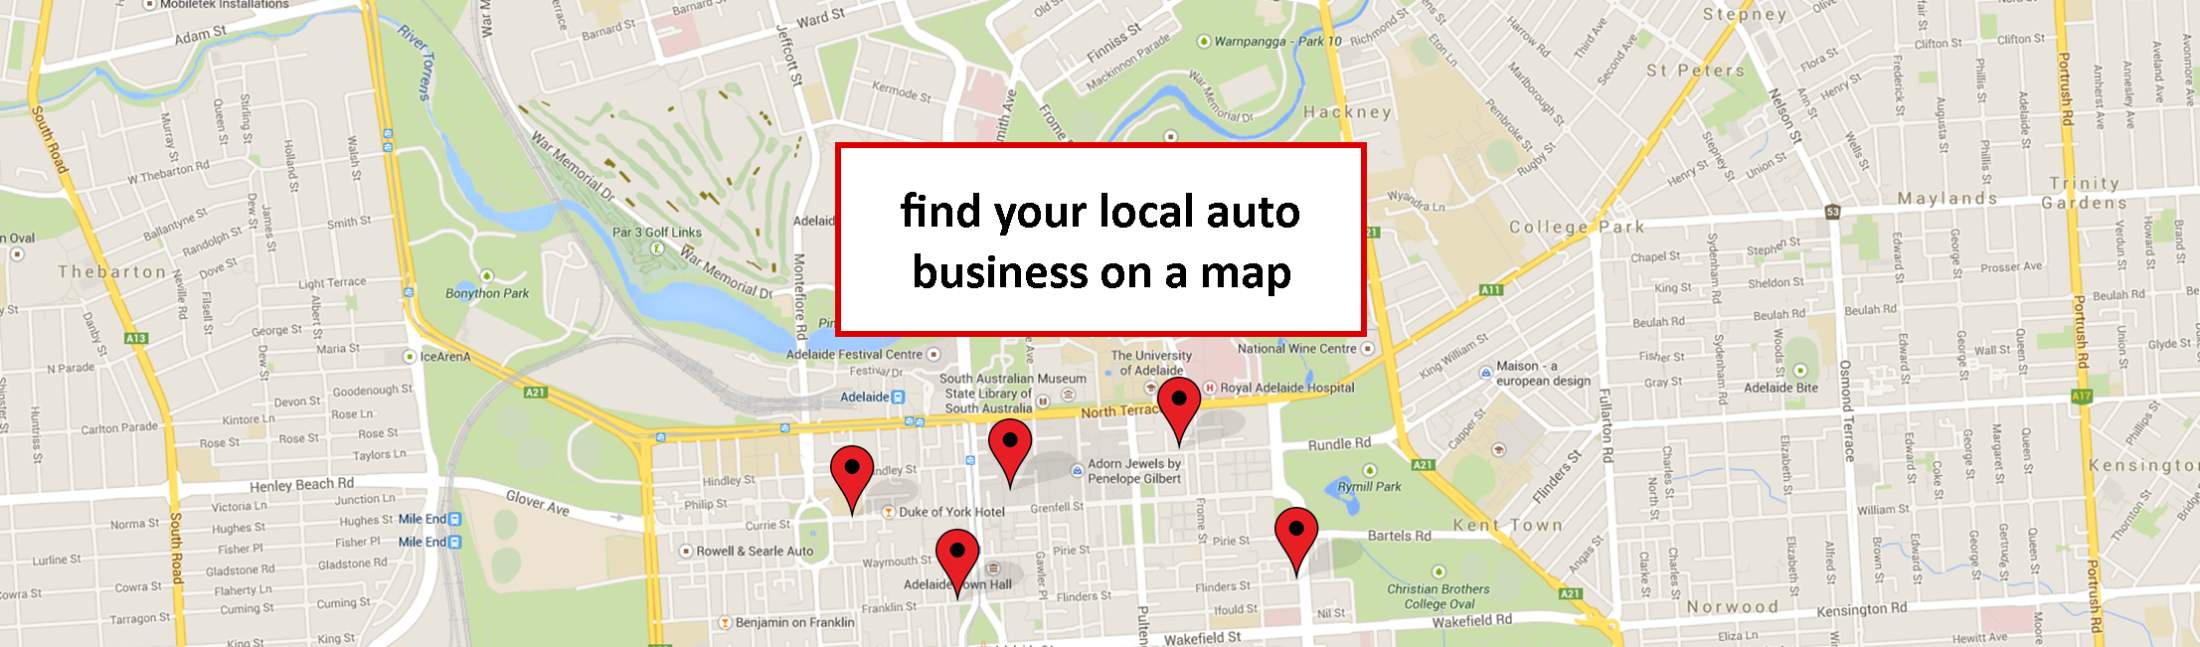 AutoEz Local Auto Business Directory